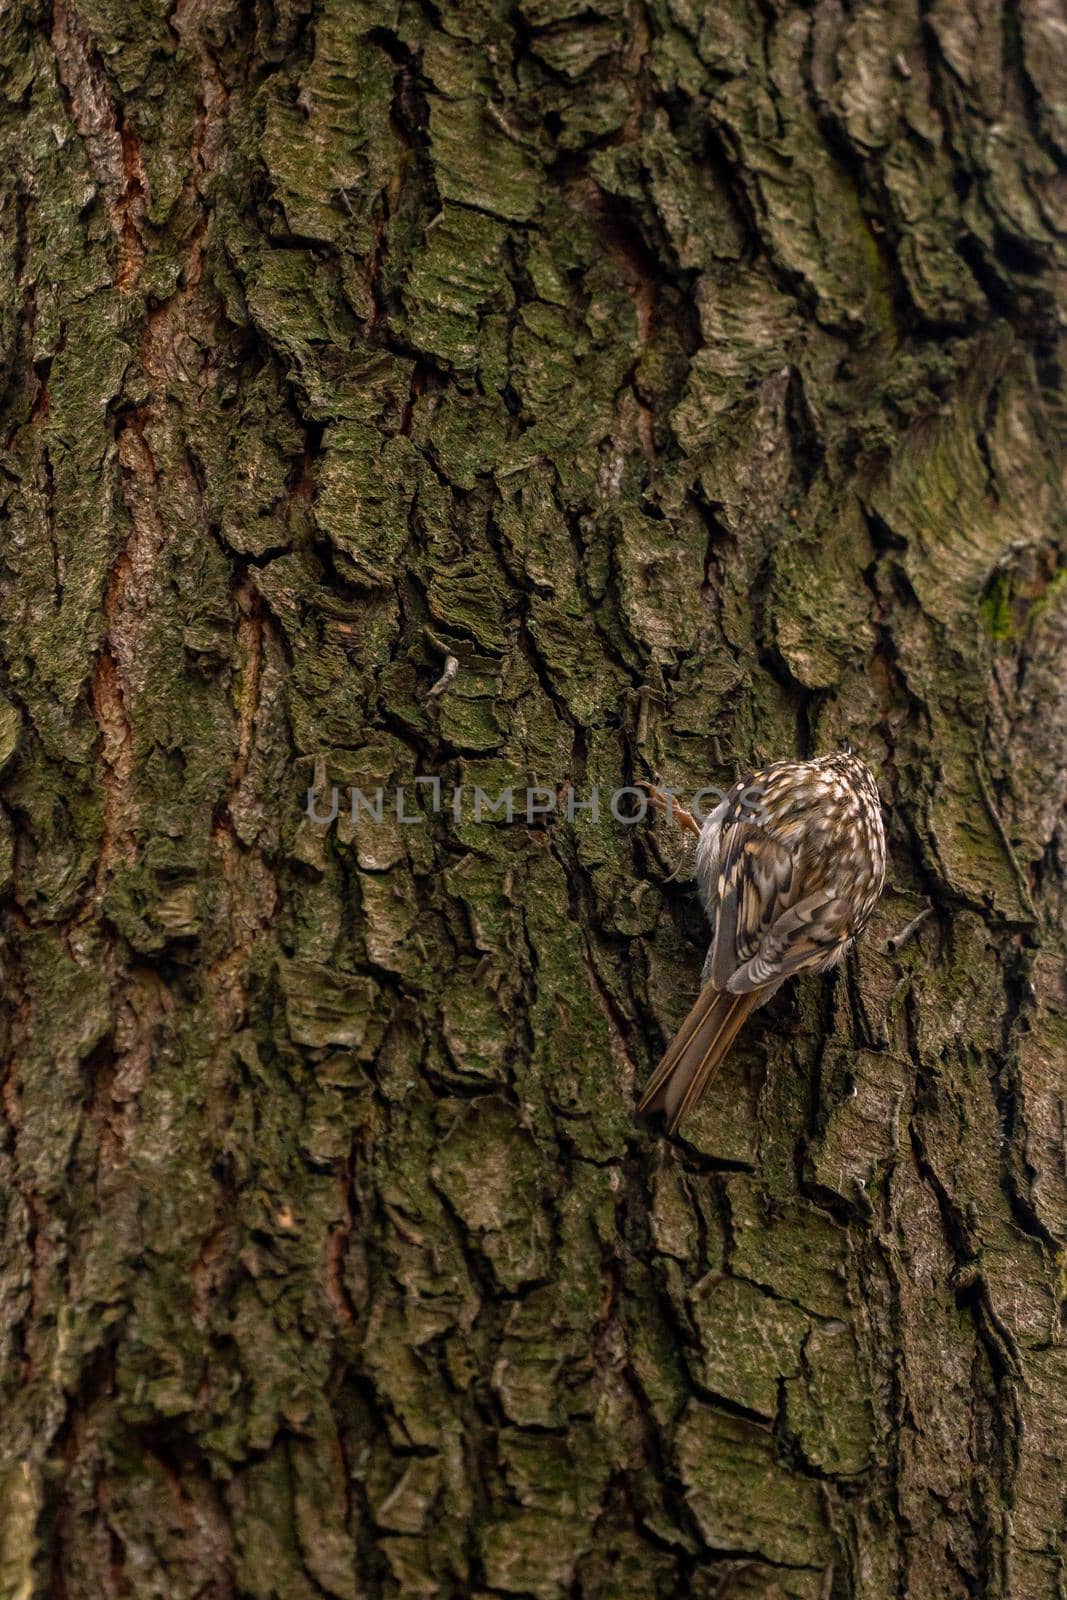 Eurasian treecreeper or common treecreeper sitting on tree trunk. Birdwatching and wildlife photography